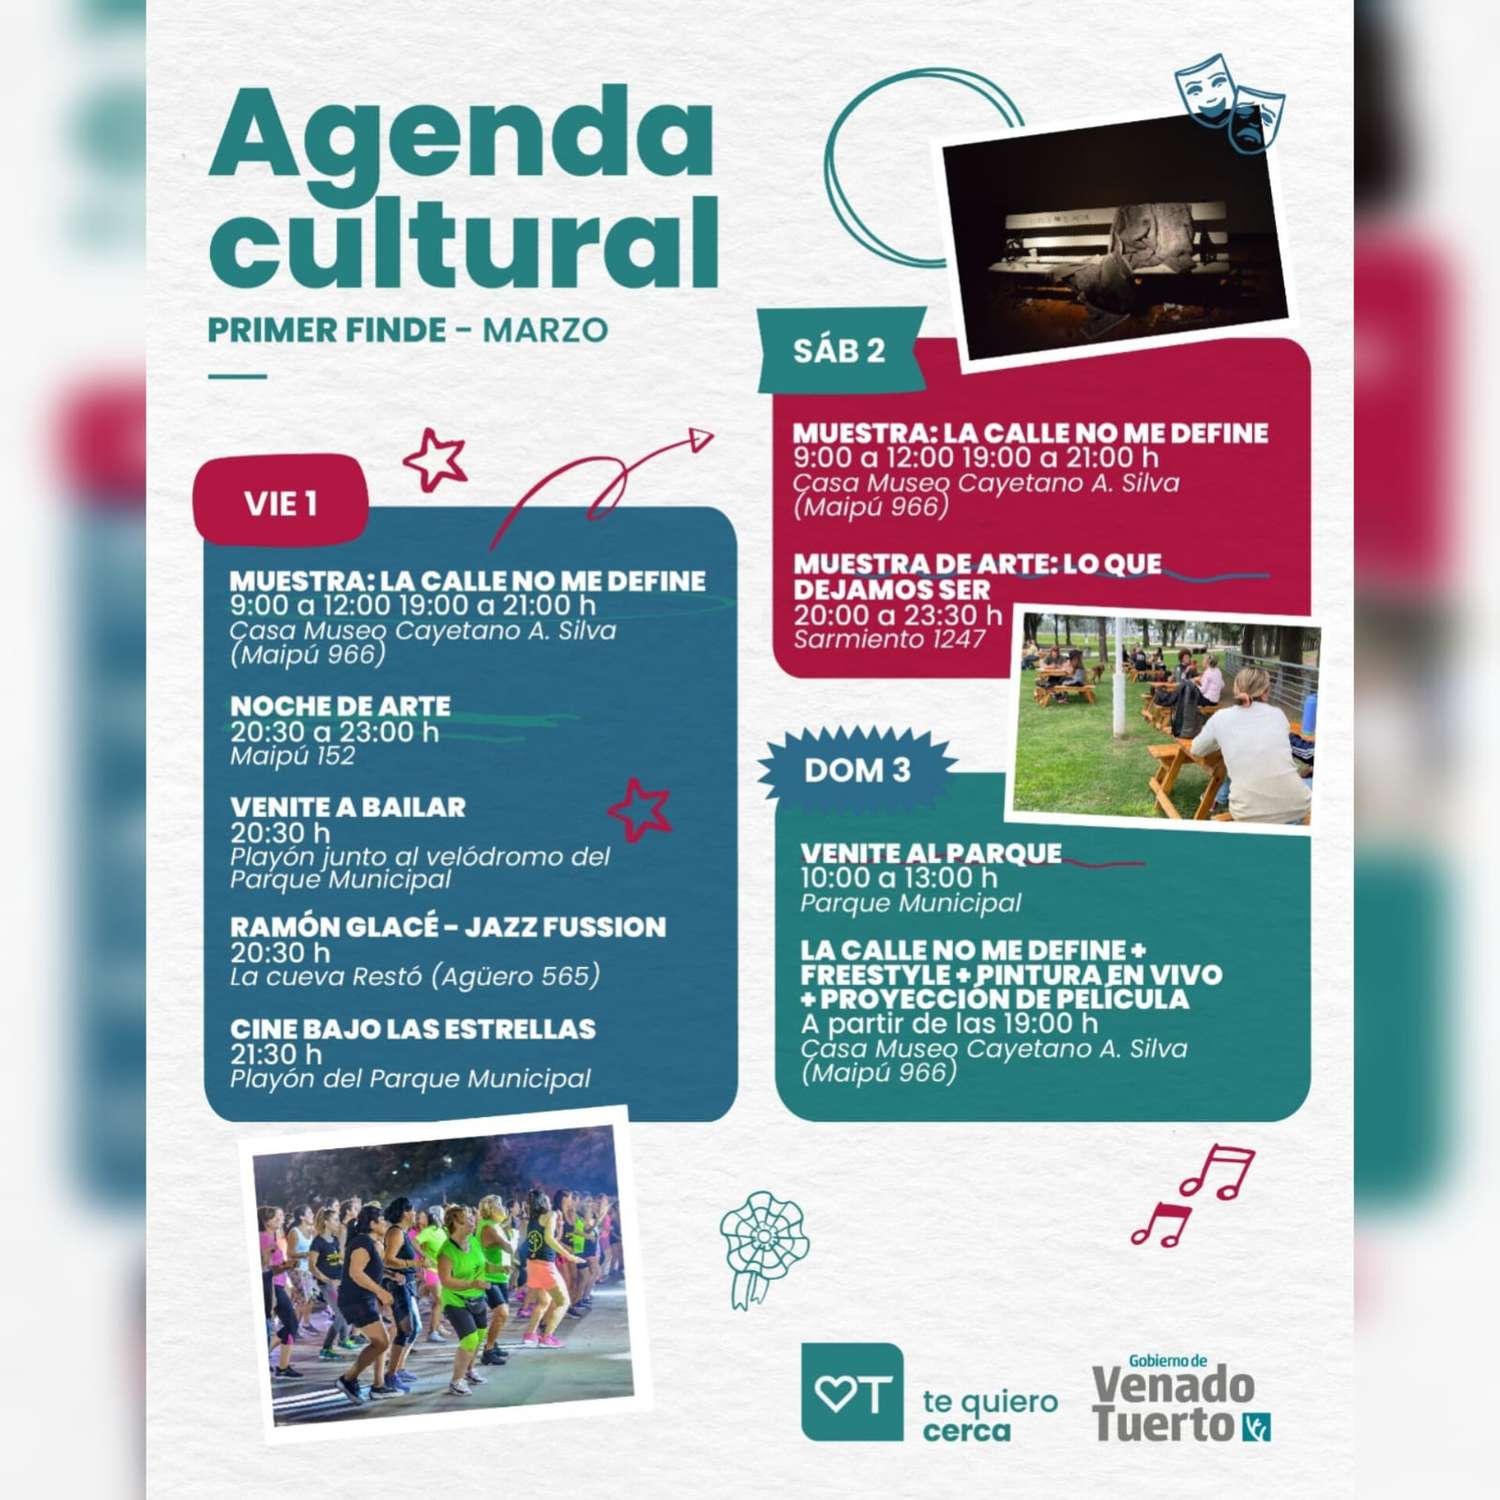 Agenda cultural primer fin de semana de marzo